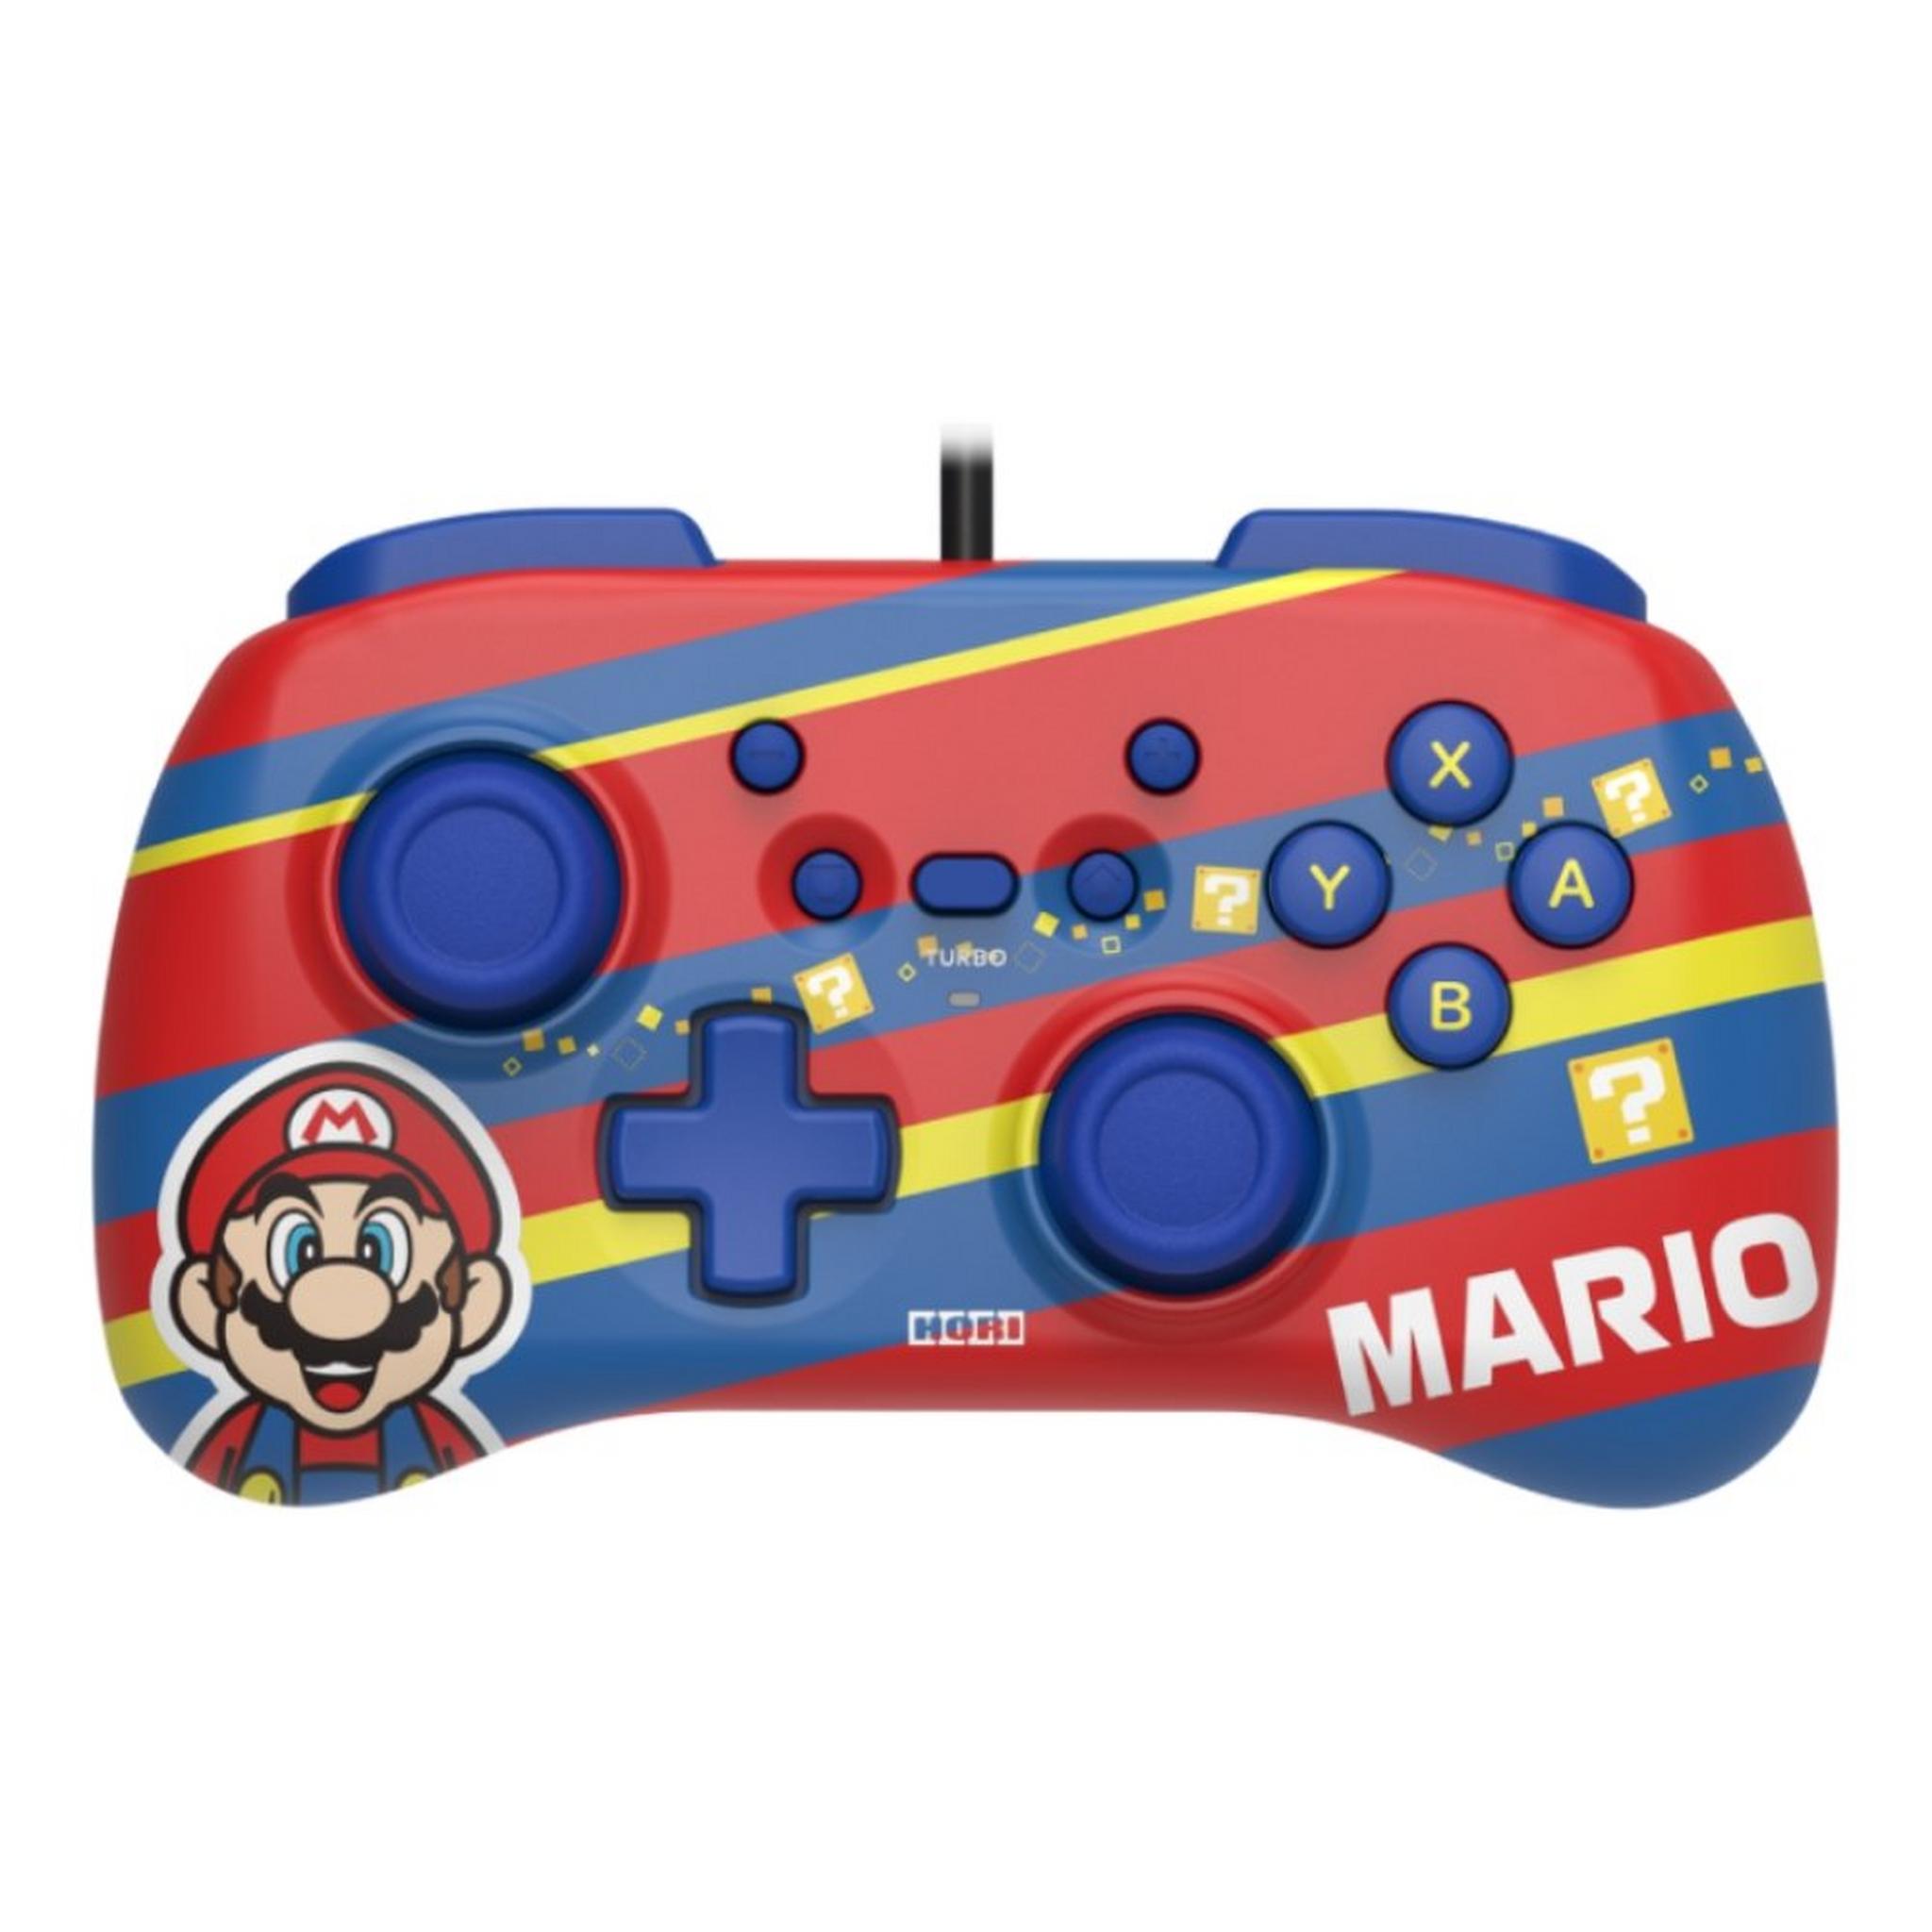 Hori Nintendo Switch HoriPad Mini Controller - Super Mario